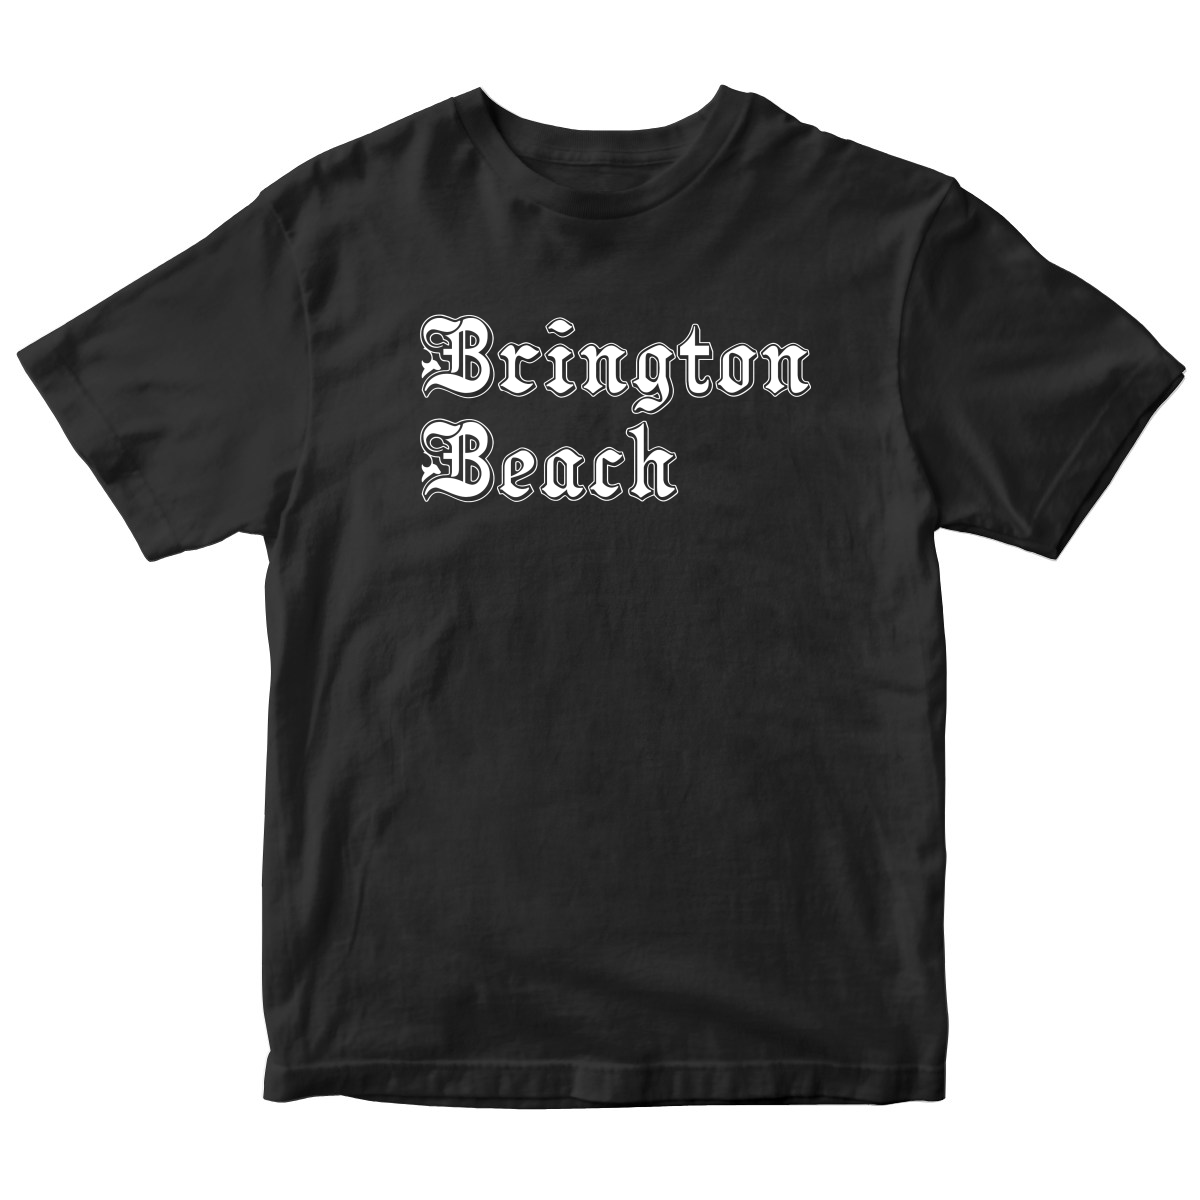 Brighton Beach Gothic Represent Toddler T-shirt | Black